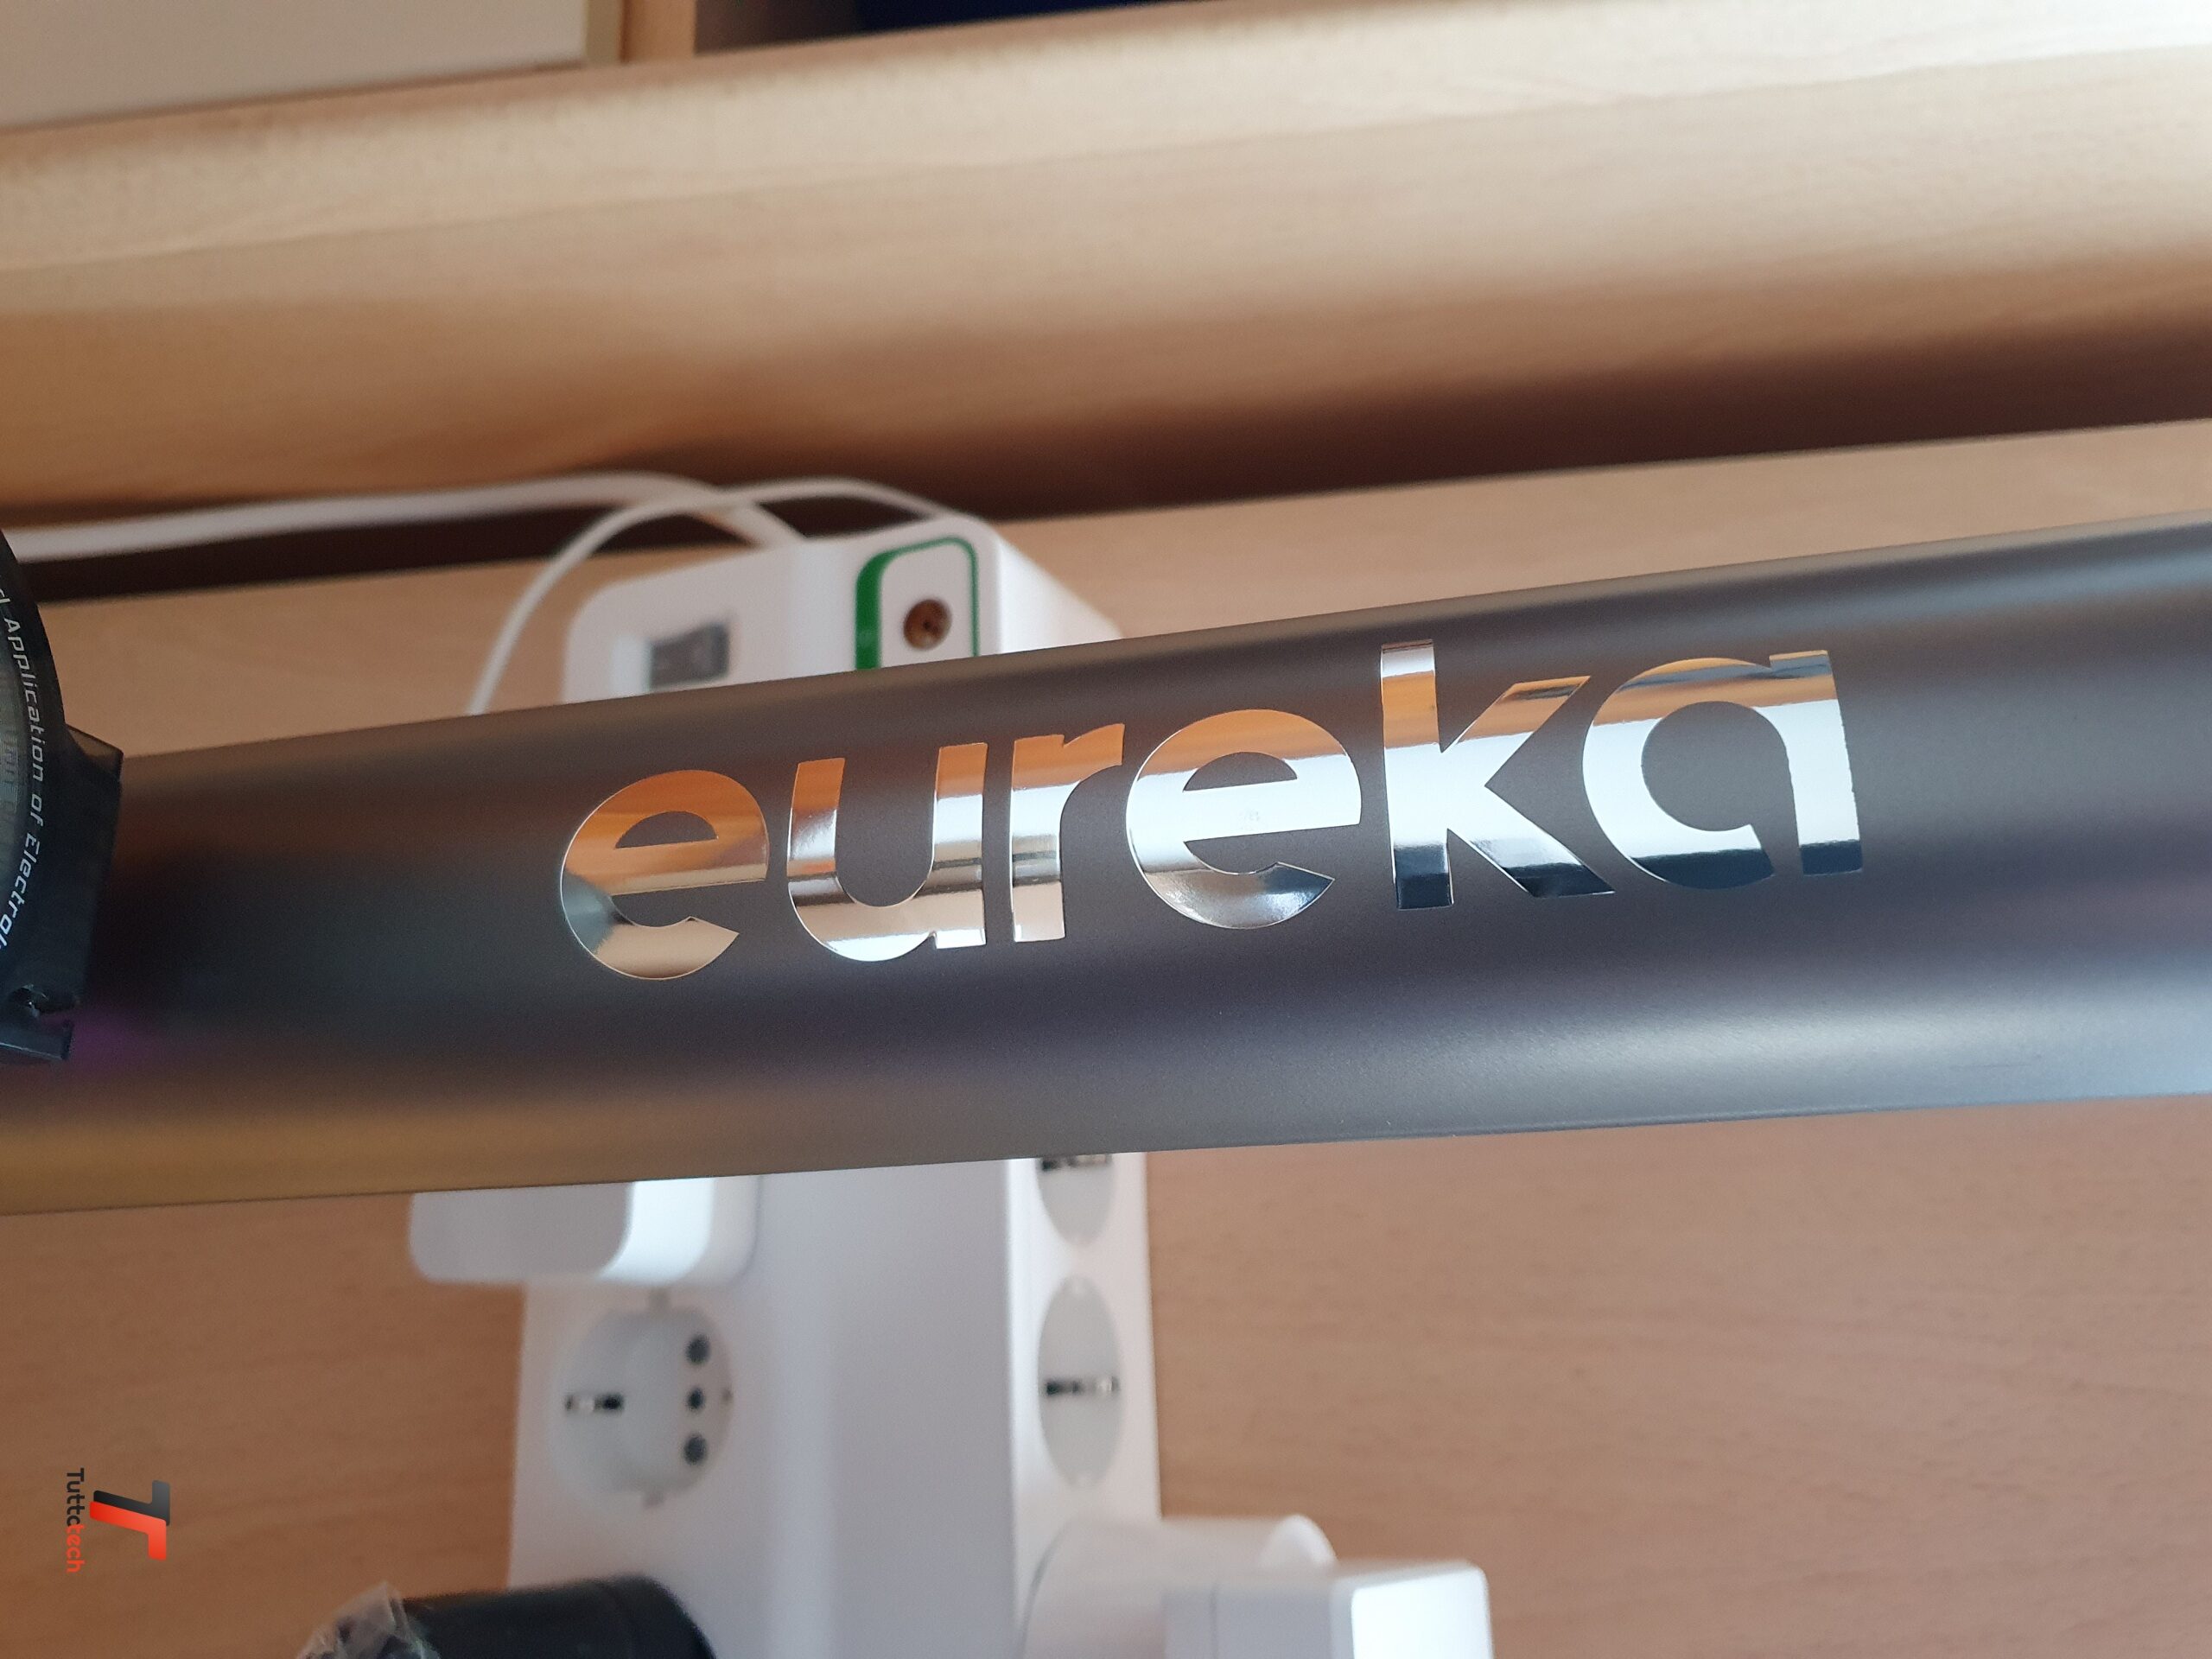 Recensione Eureka FC9, una lavapavimenti intelligente ed economica 1